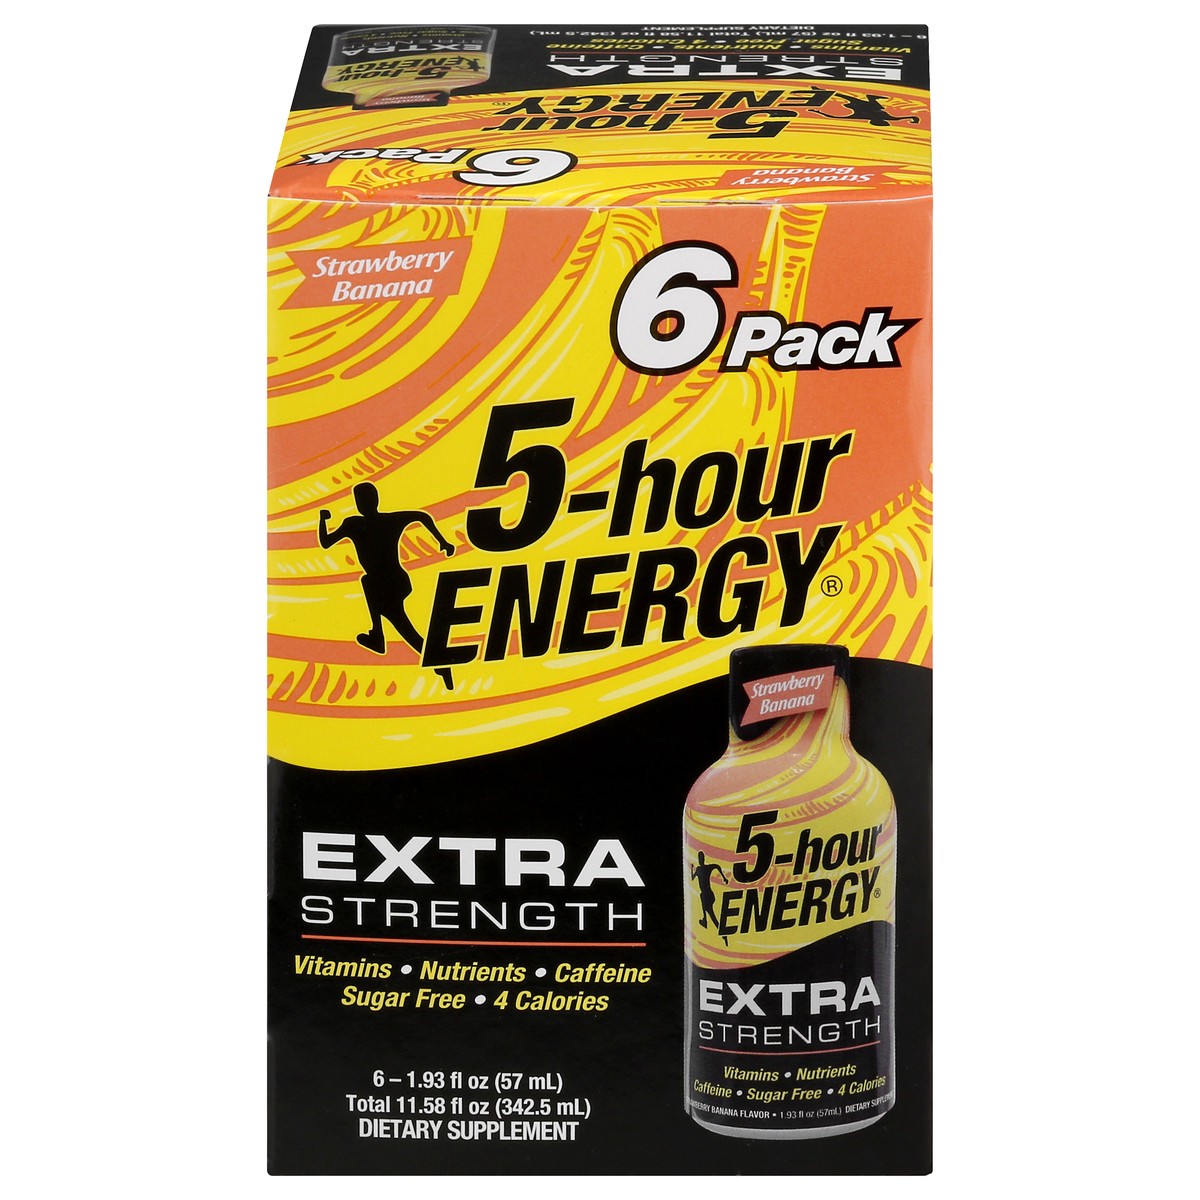 slide 1 of 9, 5-hour Energy, Extra Strength, Strawberry Banana, 6-pack, 6 ct